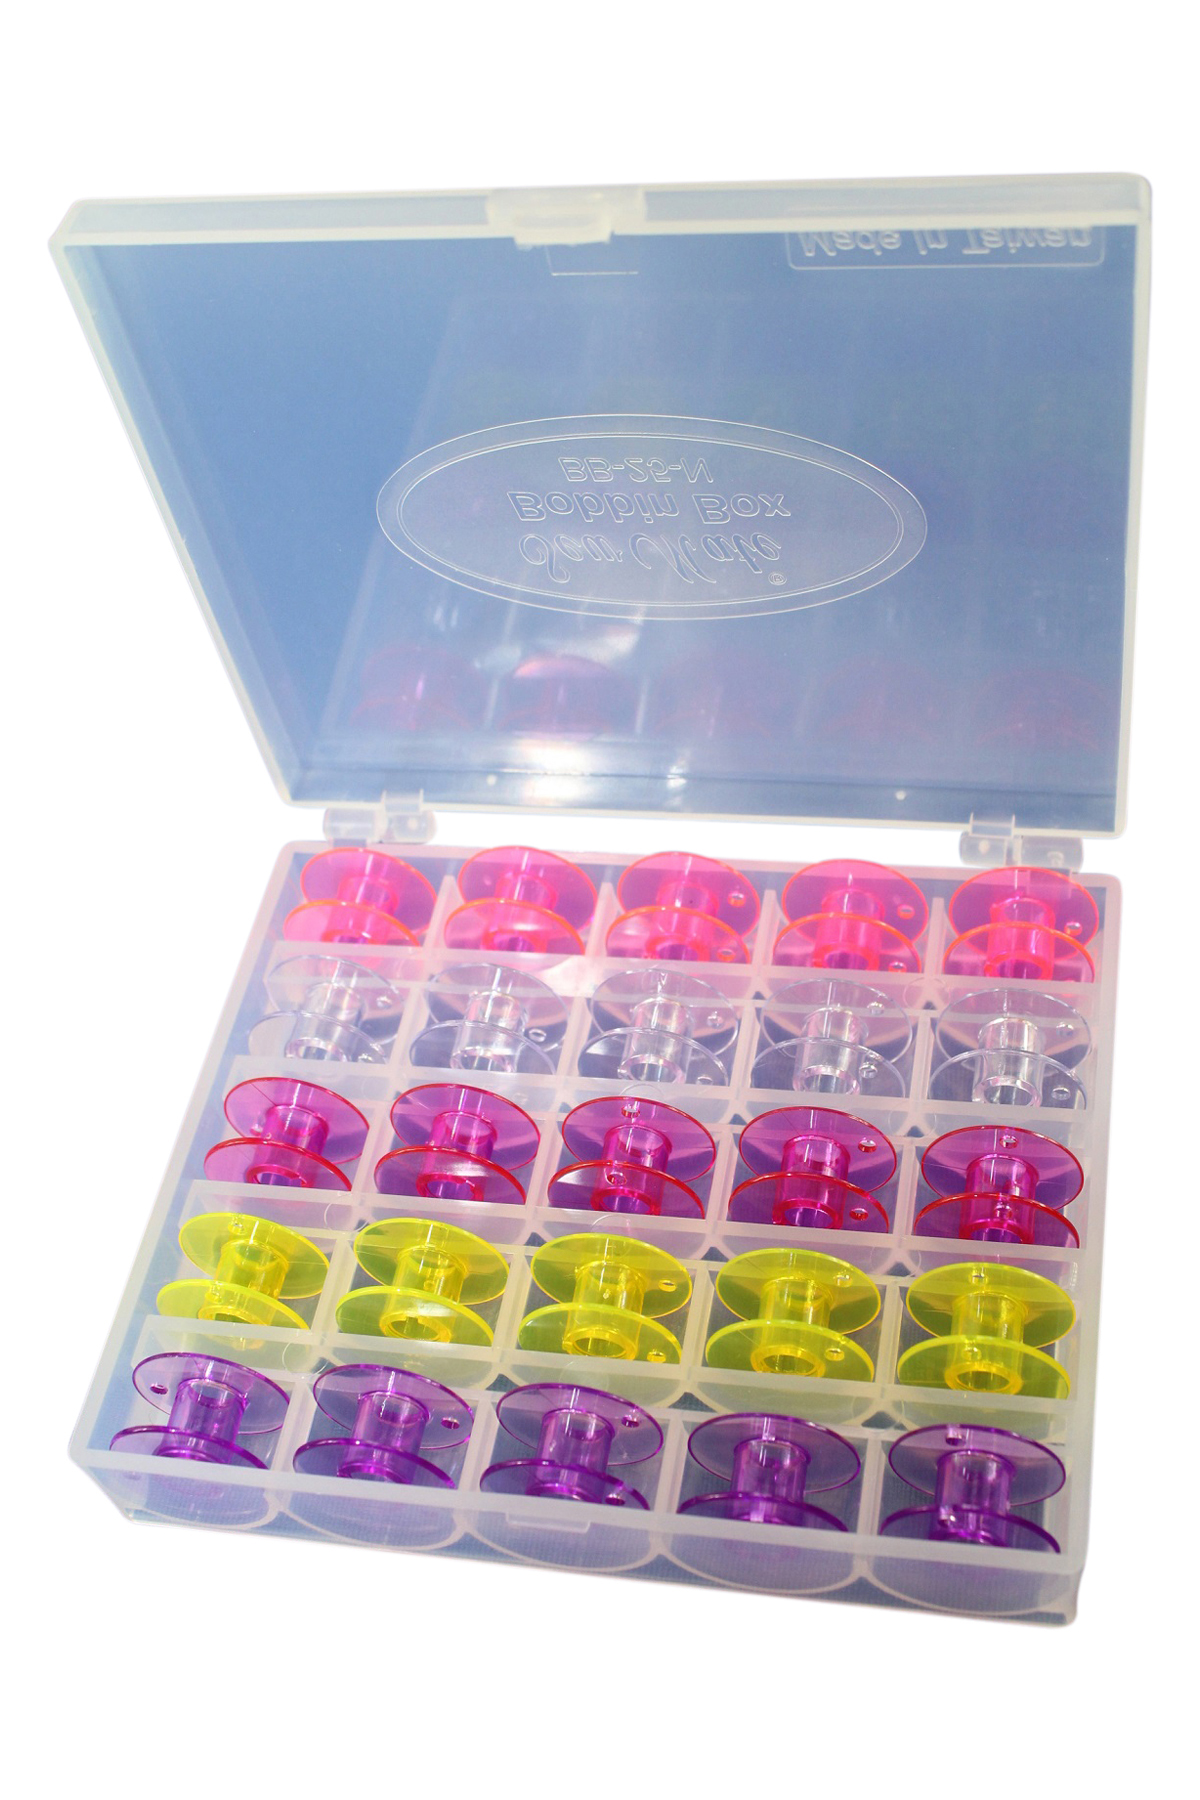 25 farbige Spulen in Box